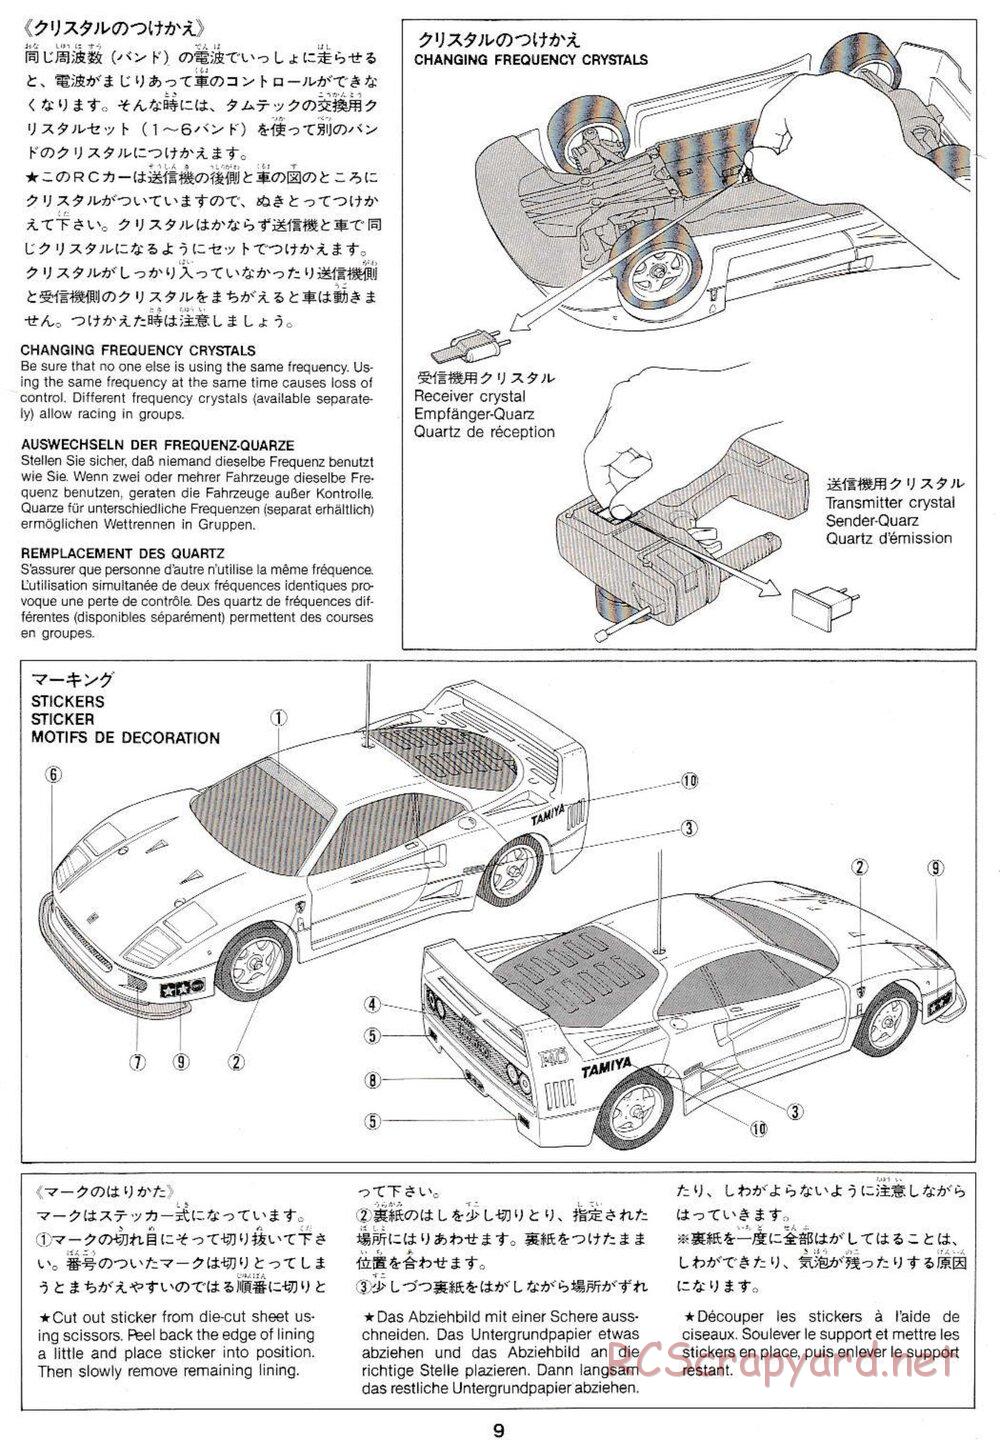 Tamiya - Ferrari F40 QD Chassis - Manual - Page 9